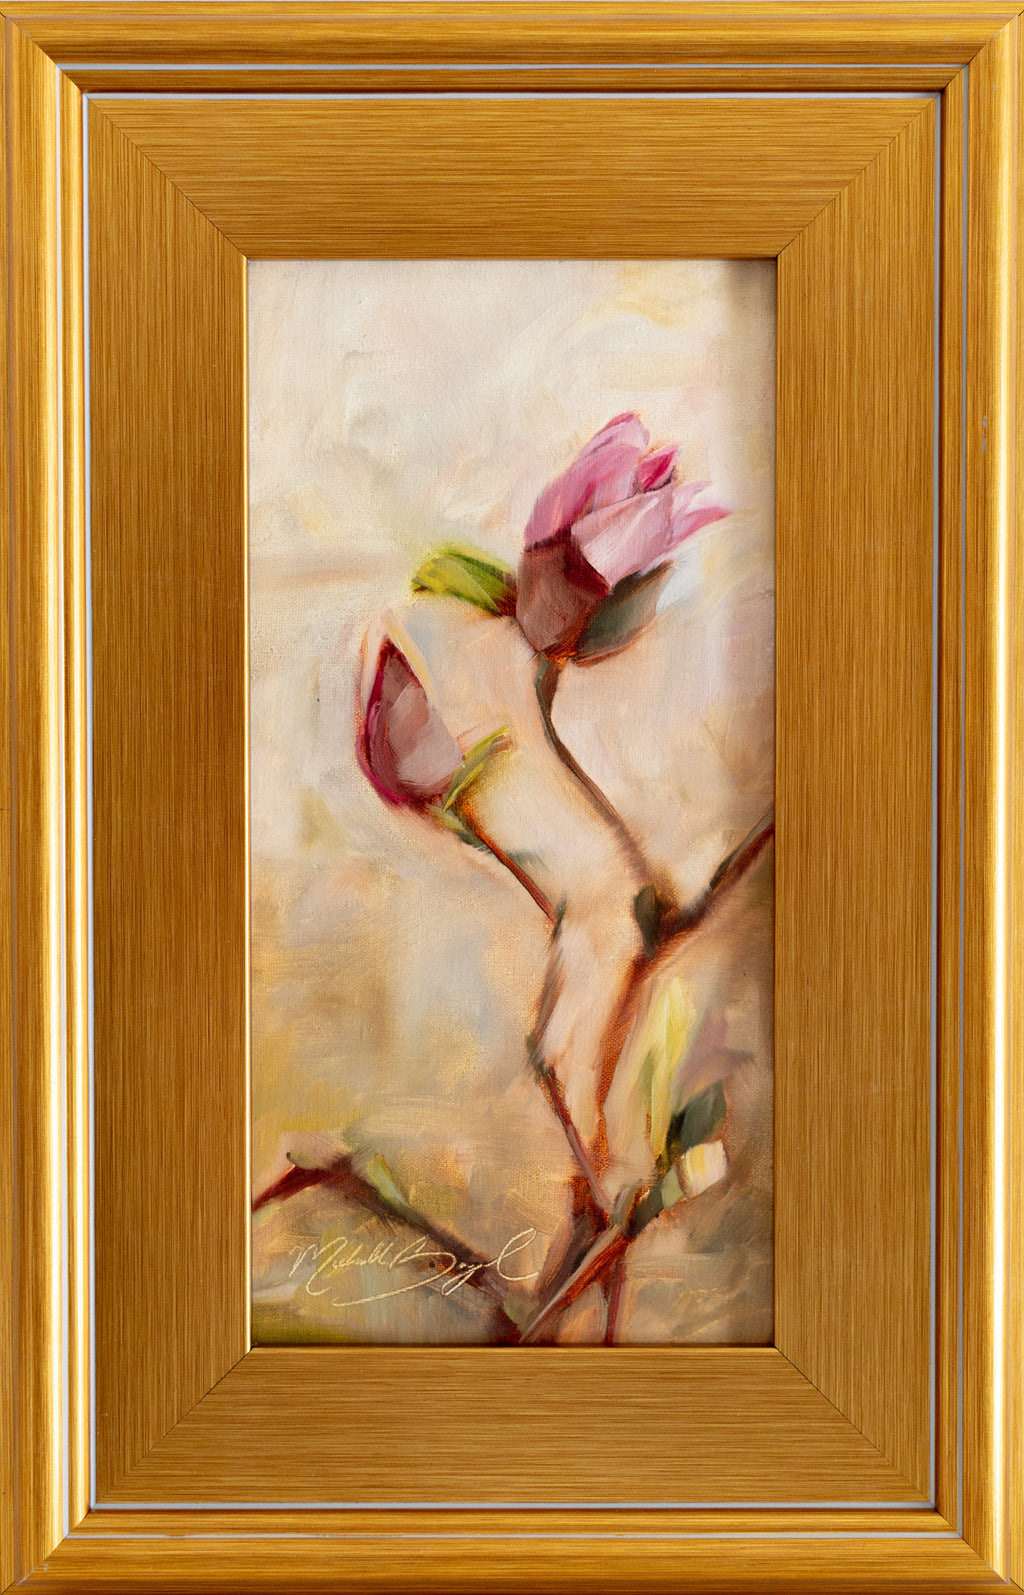 New Life - 6x12" Framed Oil Painting